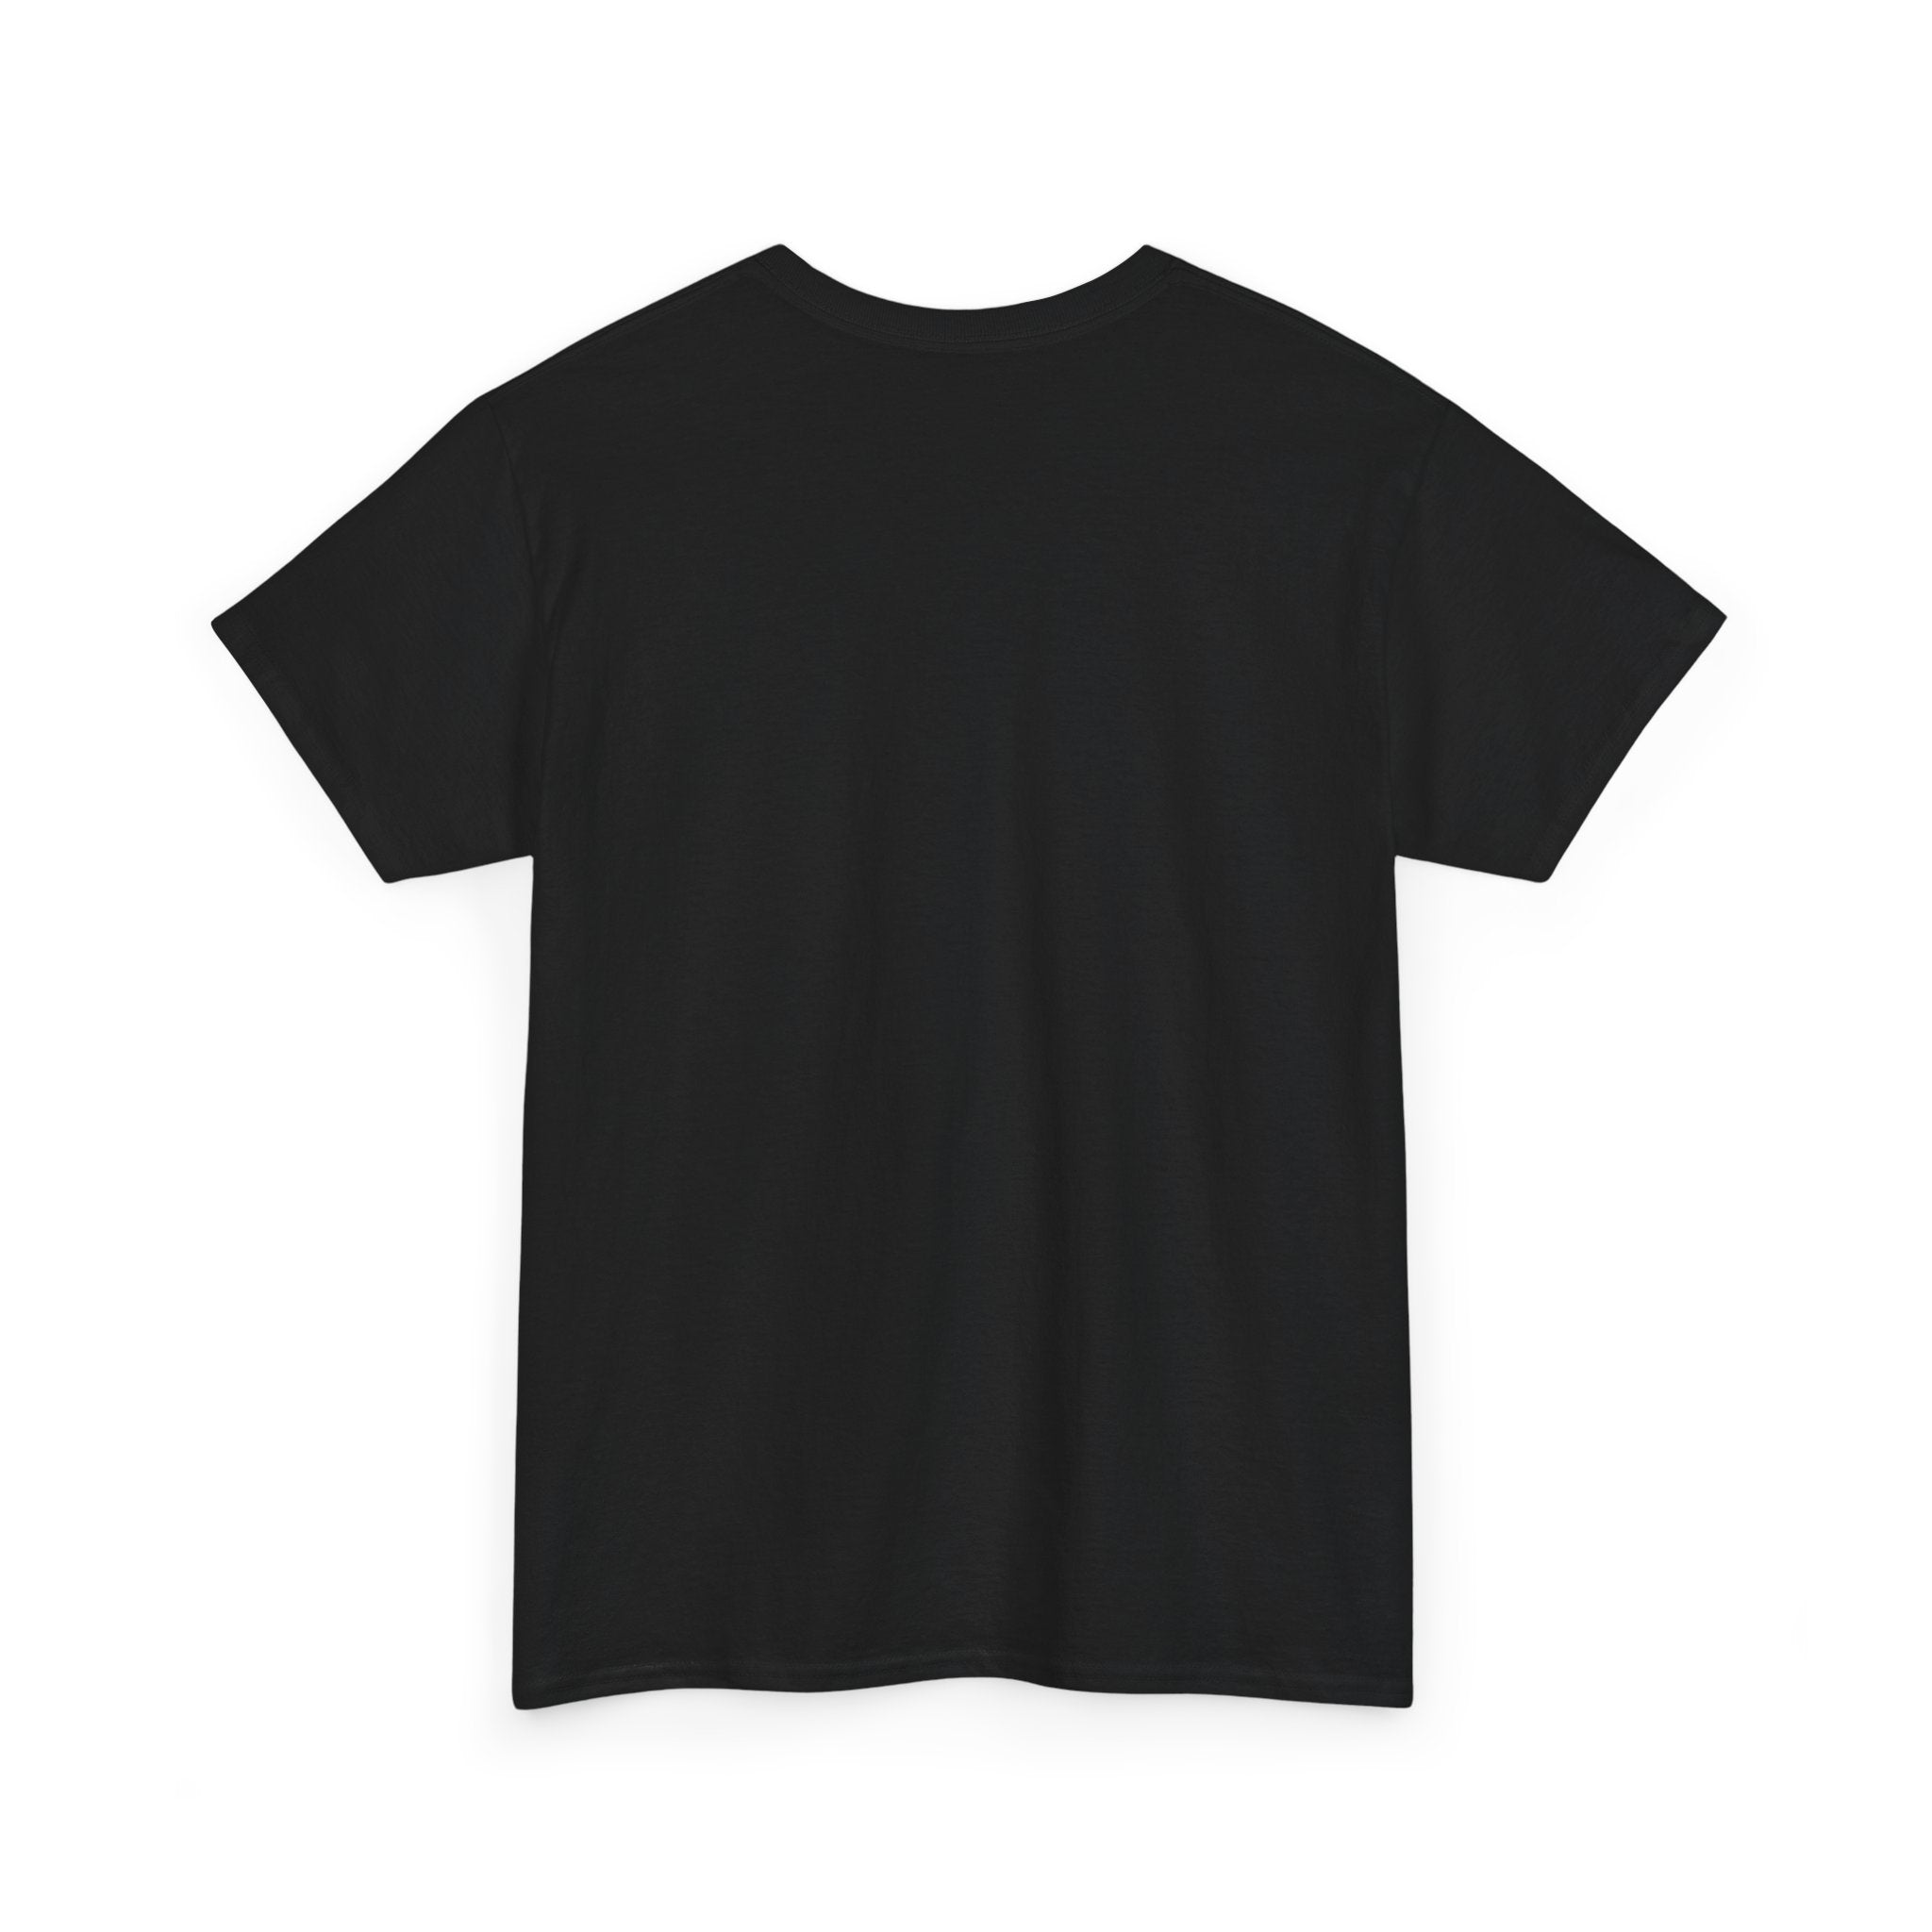 Steph Curry T-shirt